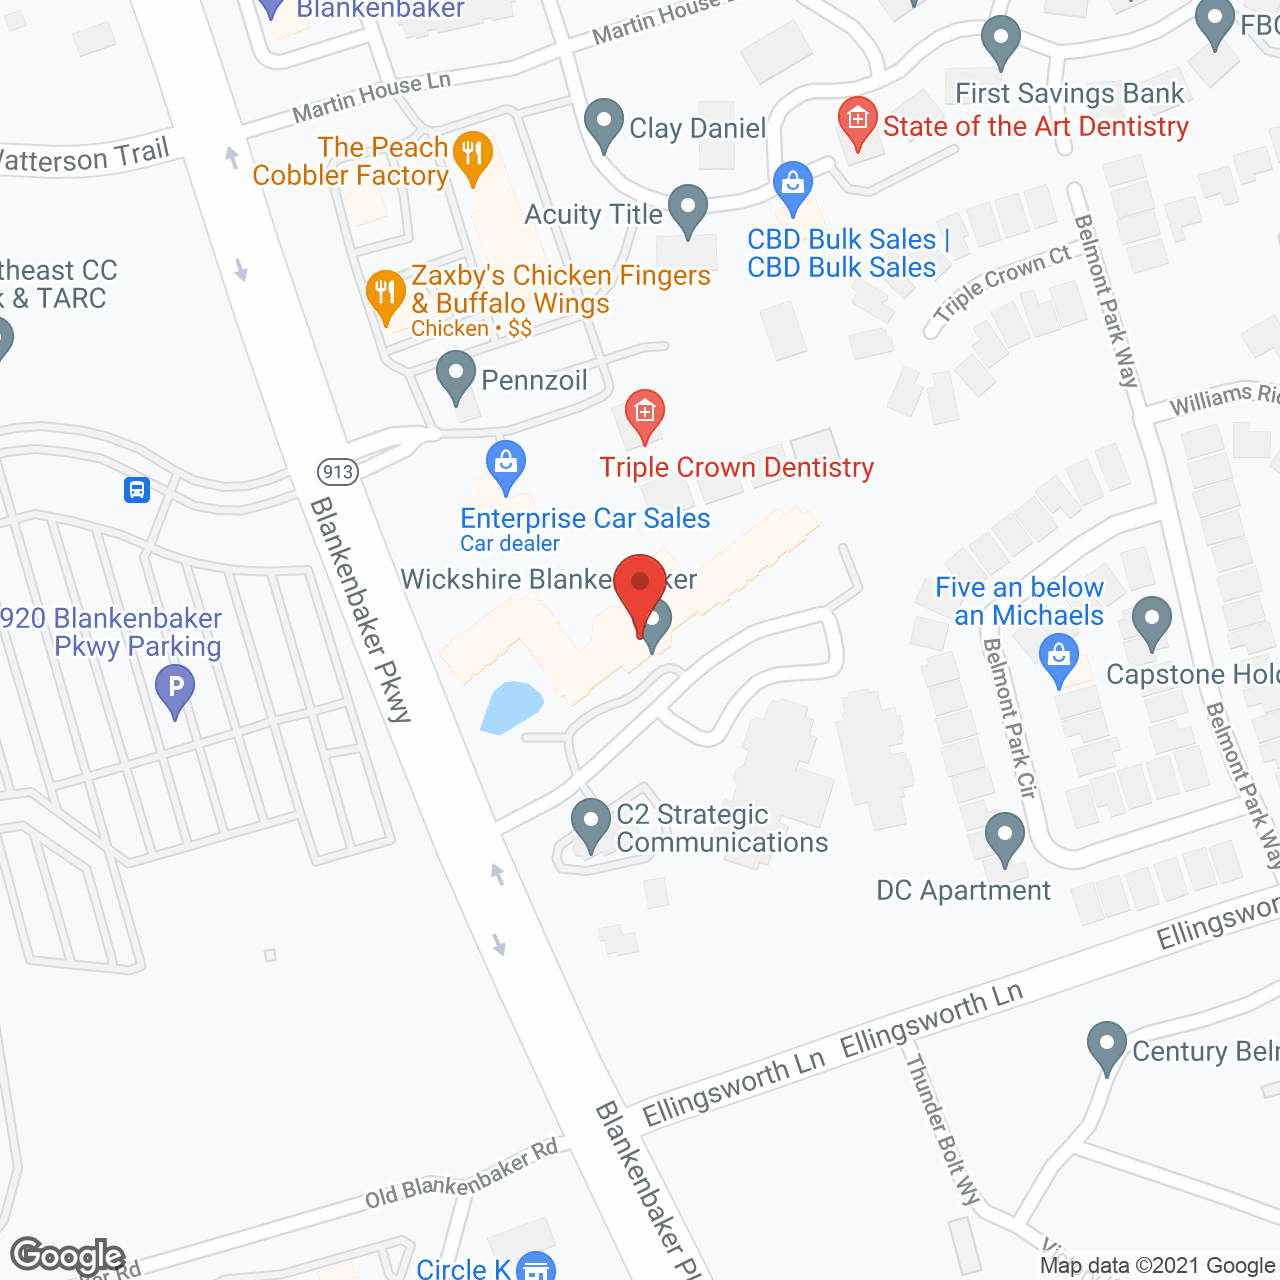 Wickshire Blankenbaker in google map